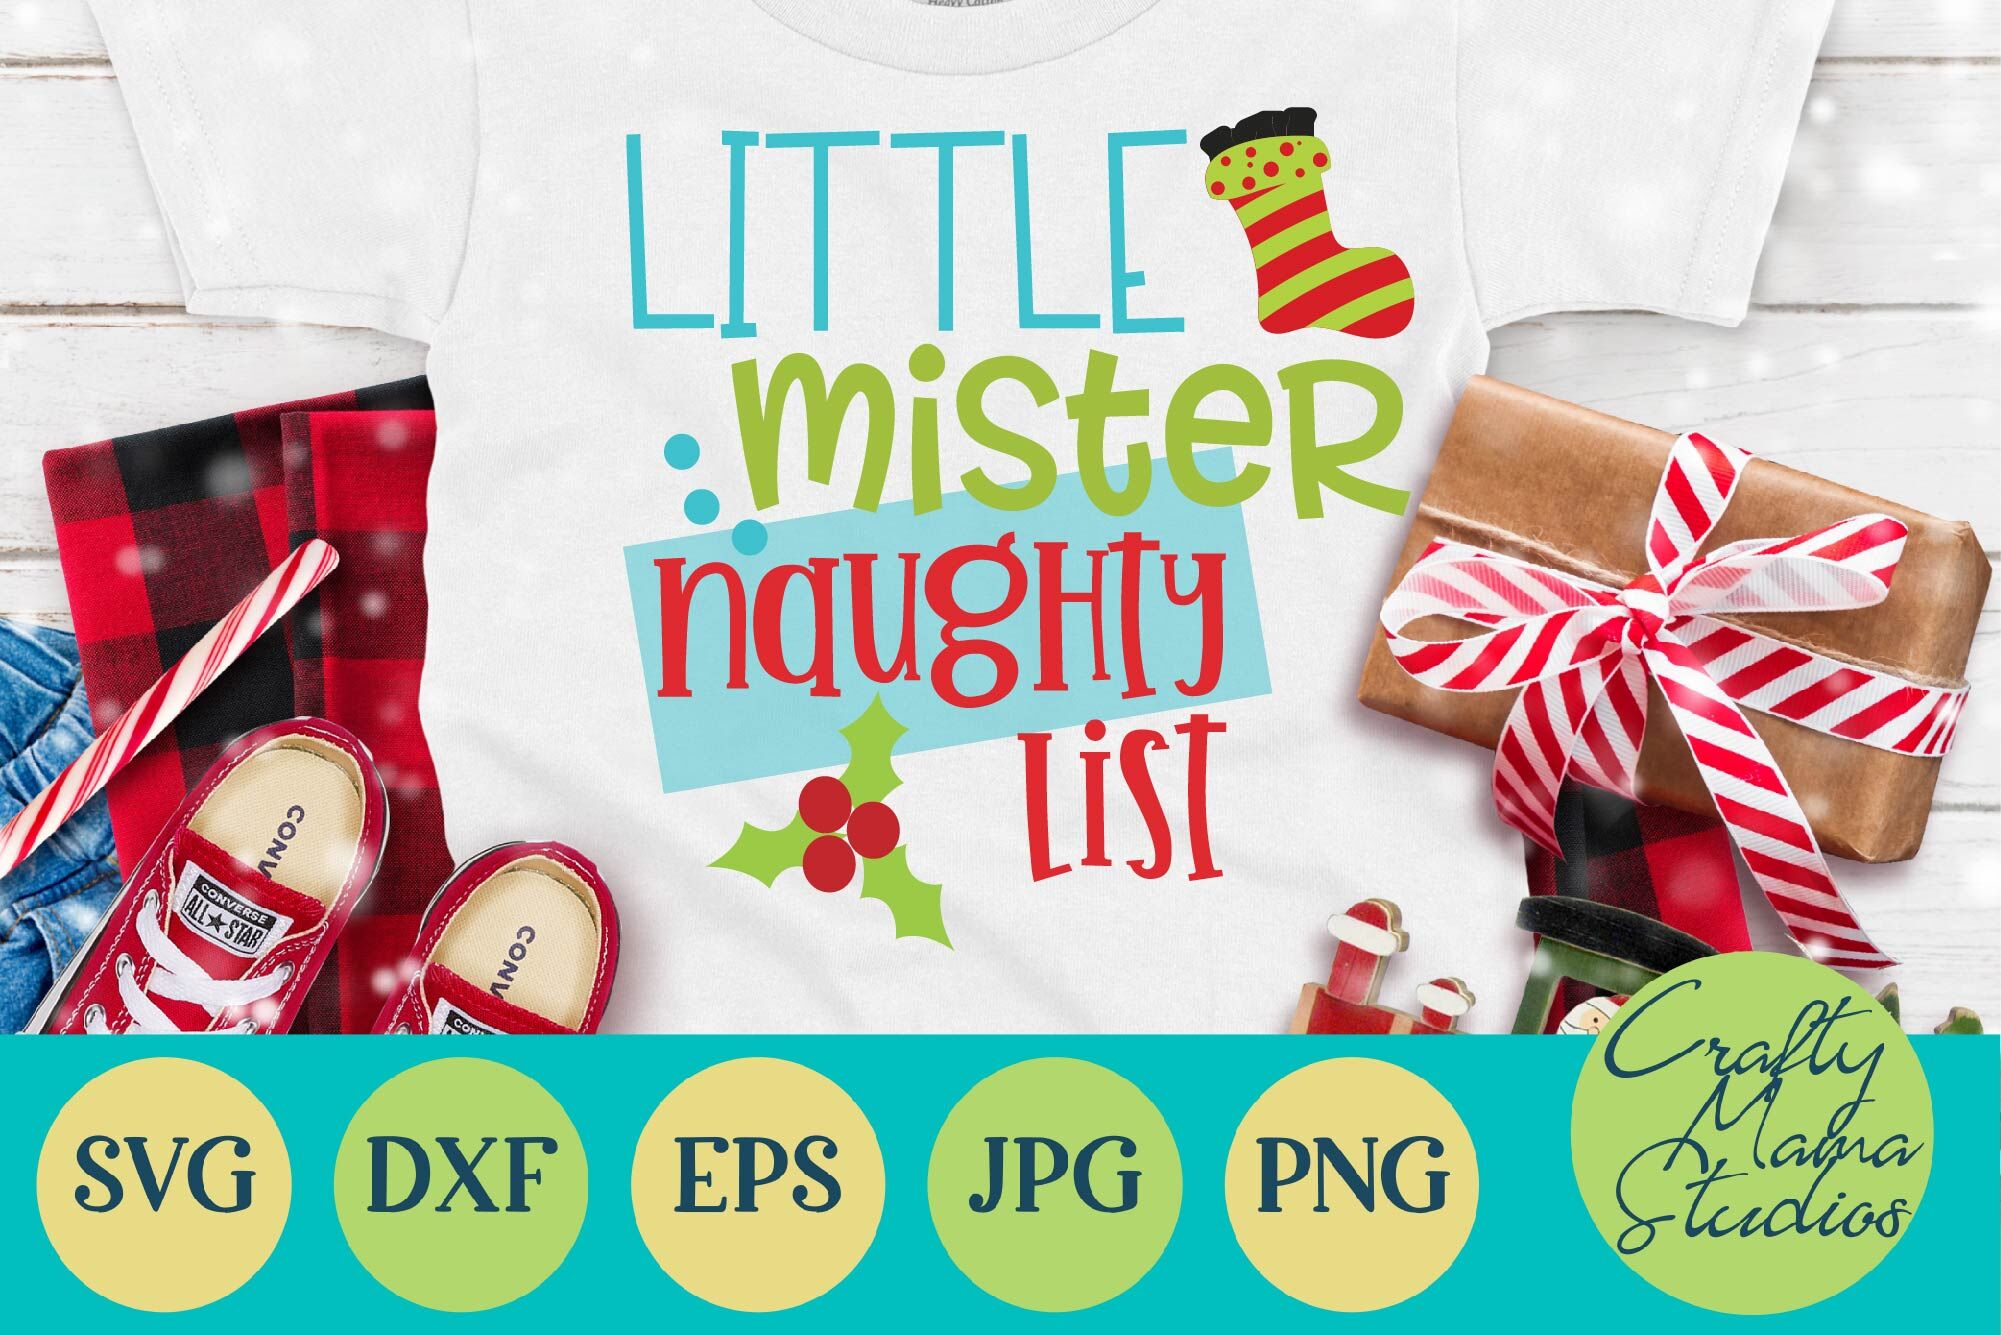 Little Mister Naughty List Svg Christmas Svg By Crafty Mama Studios Thehungryjpeg Com